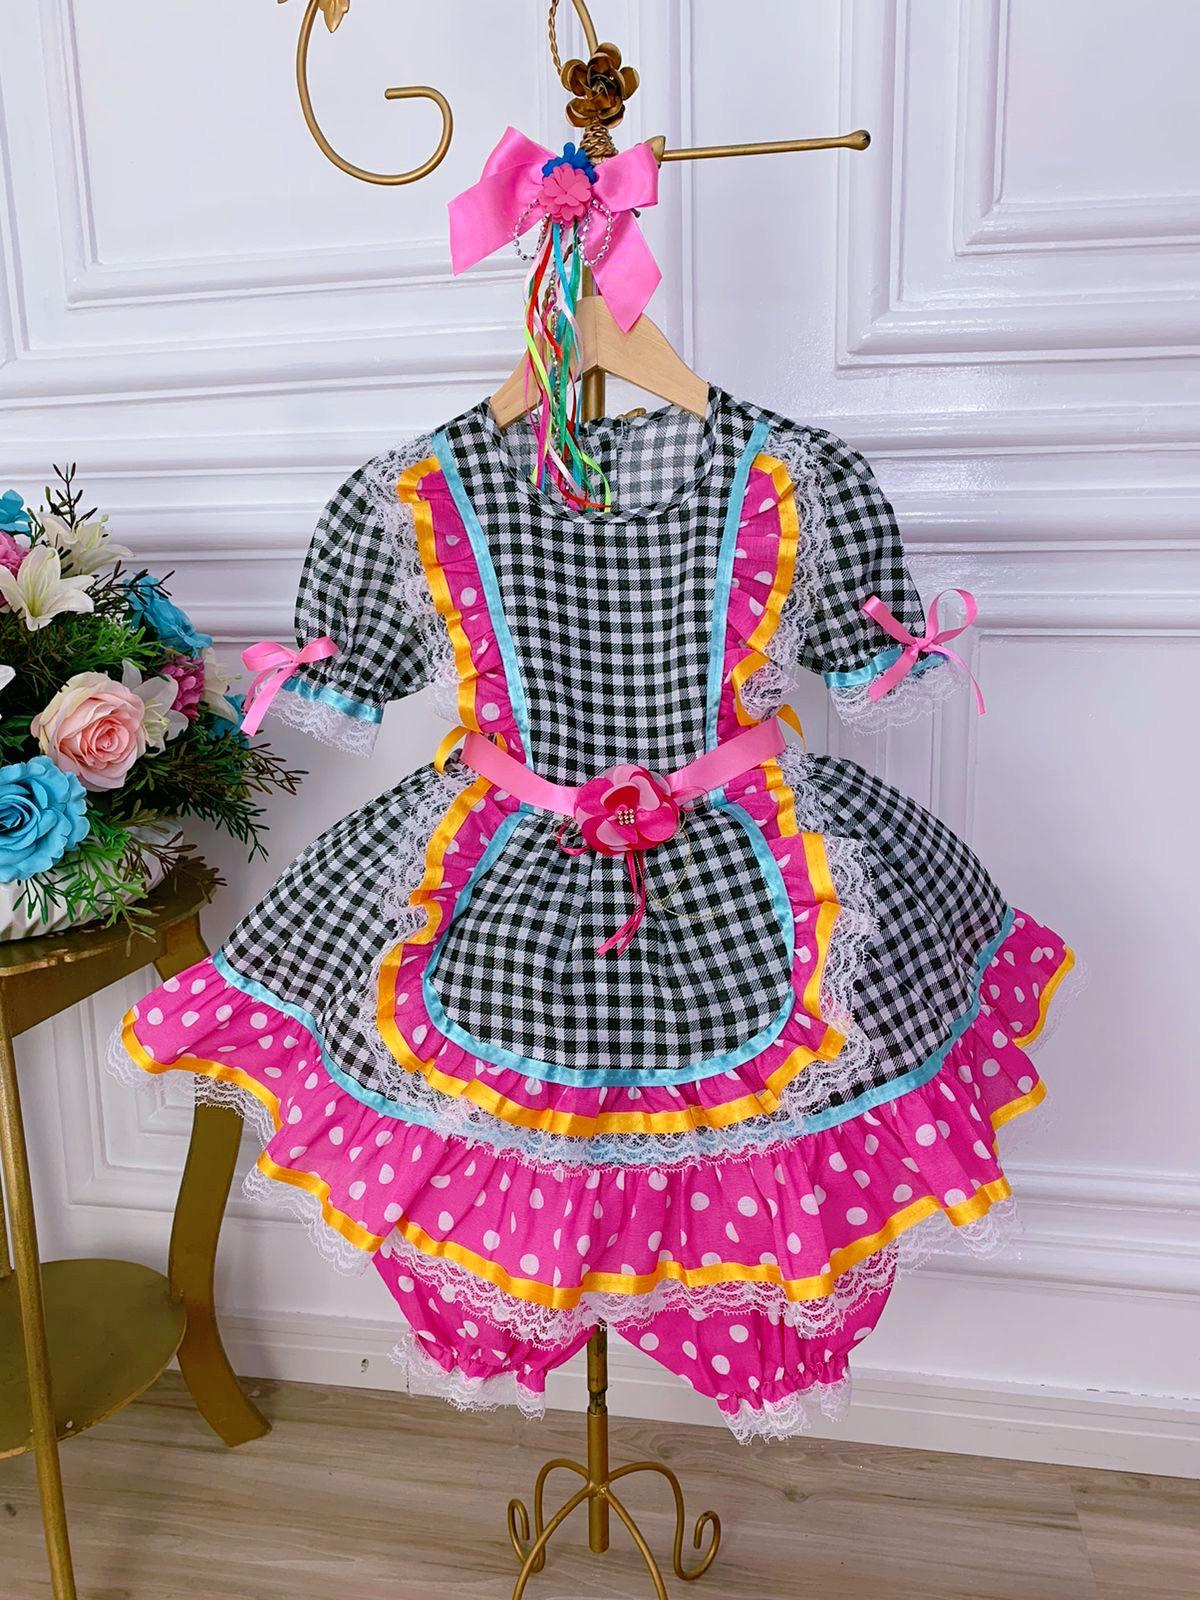 Vestido Infantil de Festa Junina Luxo Preto Xadrez e Laço Pink + Bolsinha